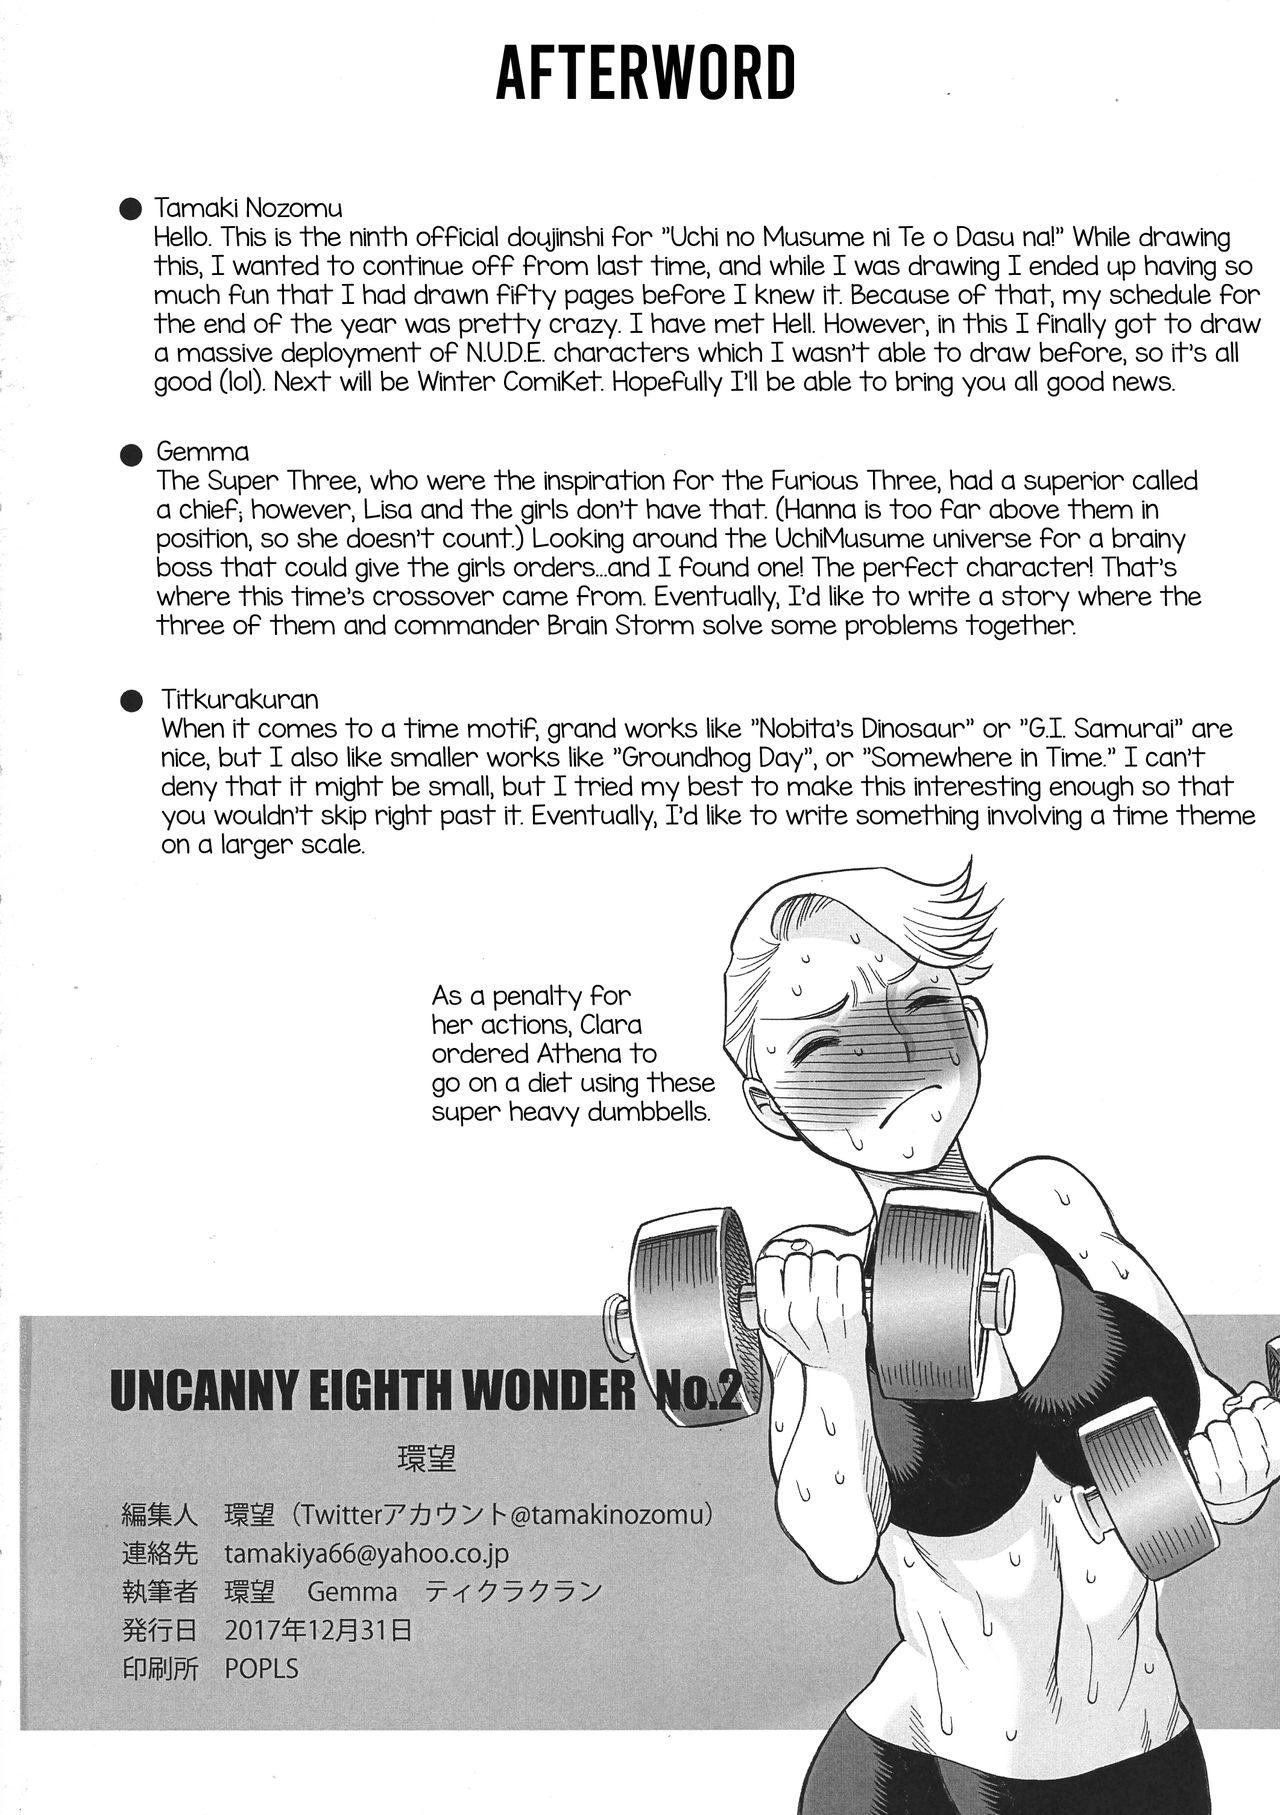 Fucked Hard Uncanny EIGHTHWONDER No.2 - Uchi no musume ni te o dasuna Sem Camisinha - Page 55